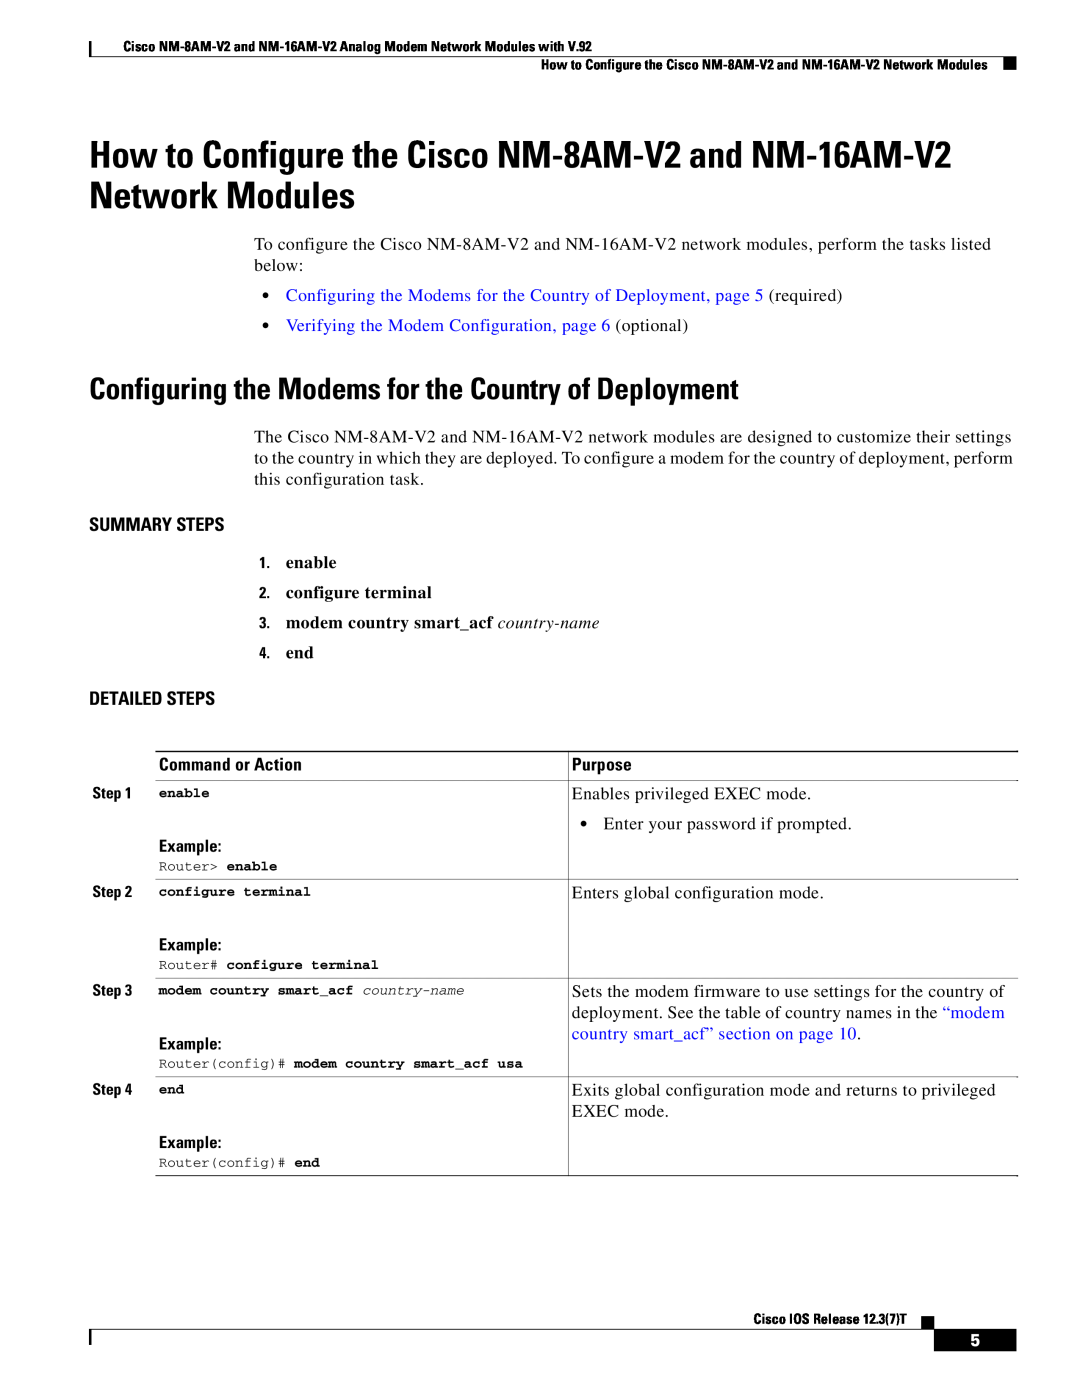 Cisco Systems manual How to Configure the Cisco NM-8AM-V2 and NM-16AM-V2 Network Modules, Summary Steps, Detailed Steps 